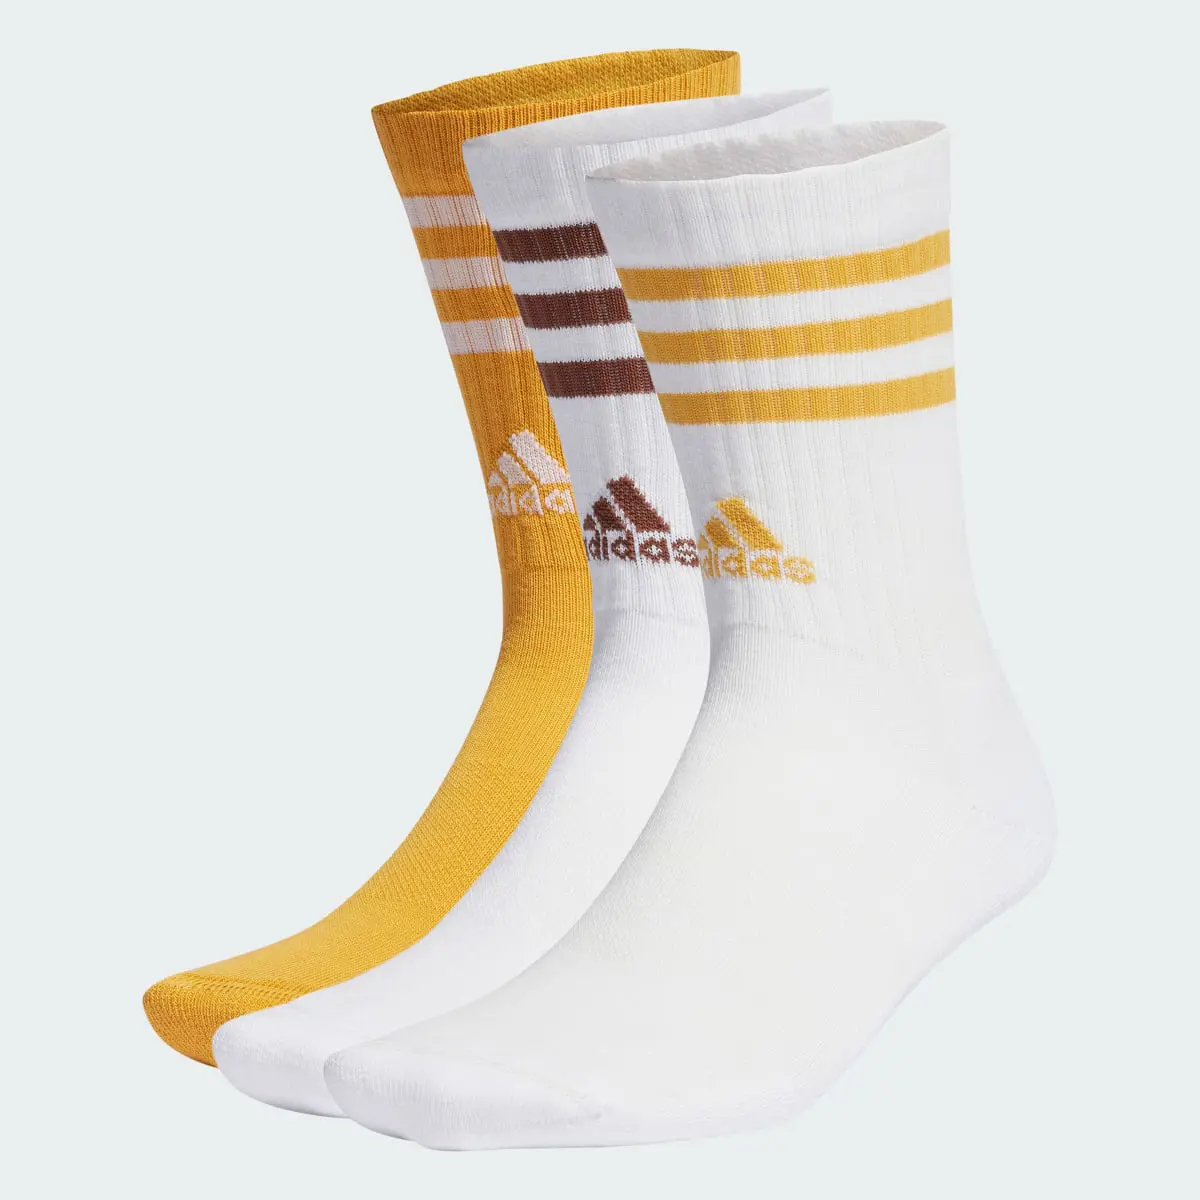 Adidas 3-Stripes Cushioned Crew Socks 3 Pairs. 2